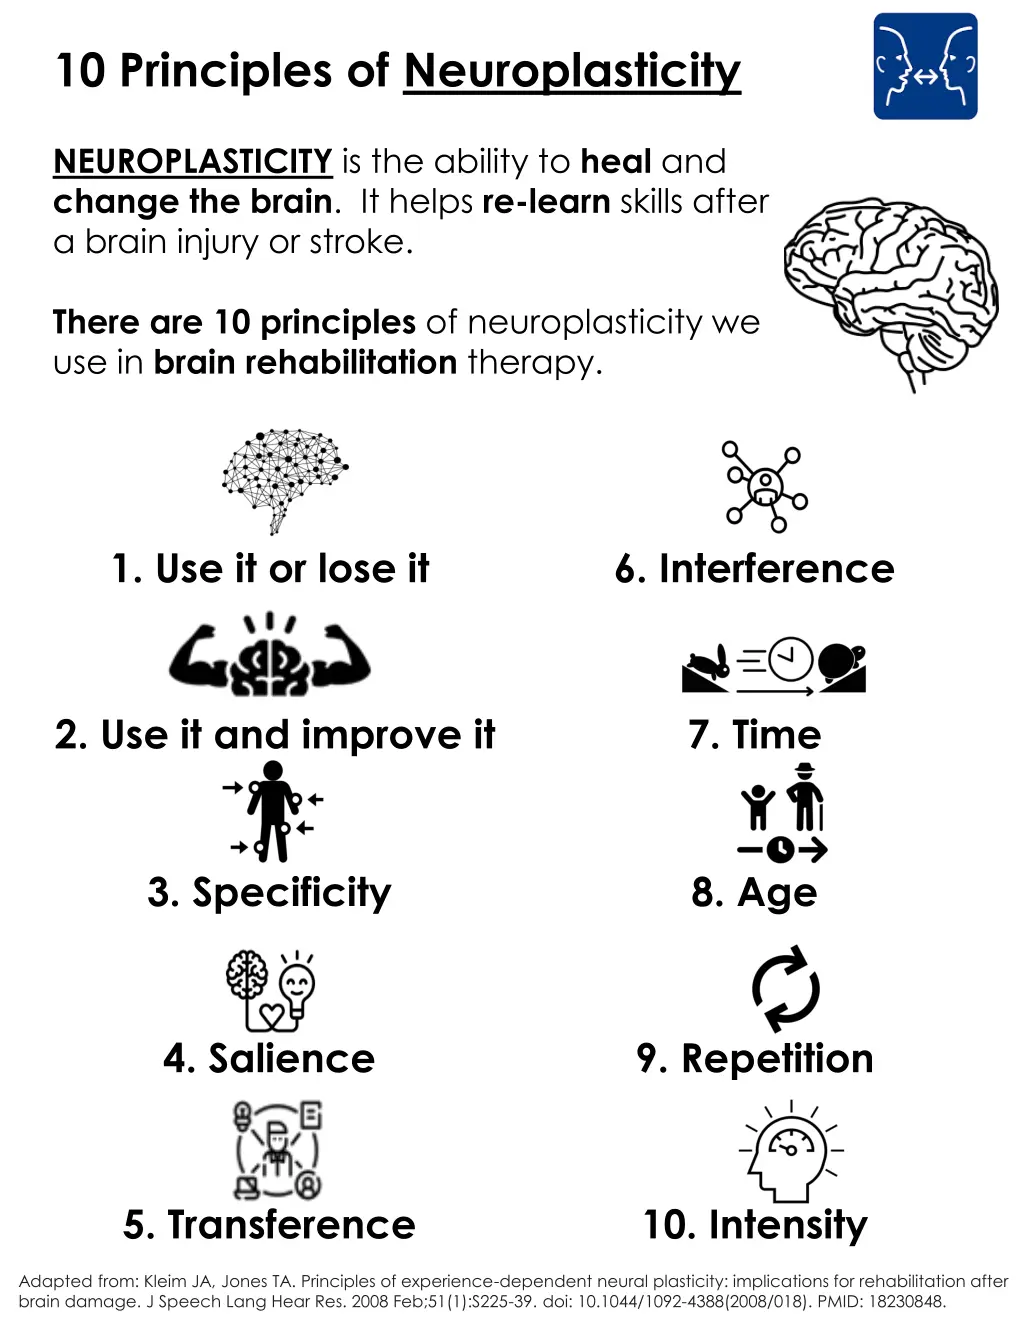 10 principles of neuroplasticity 1